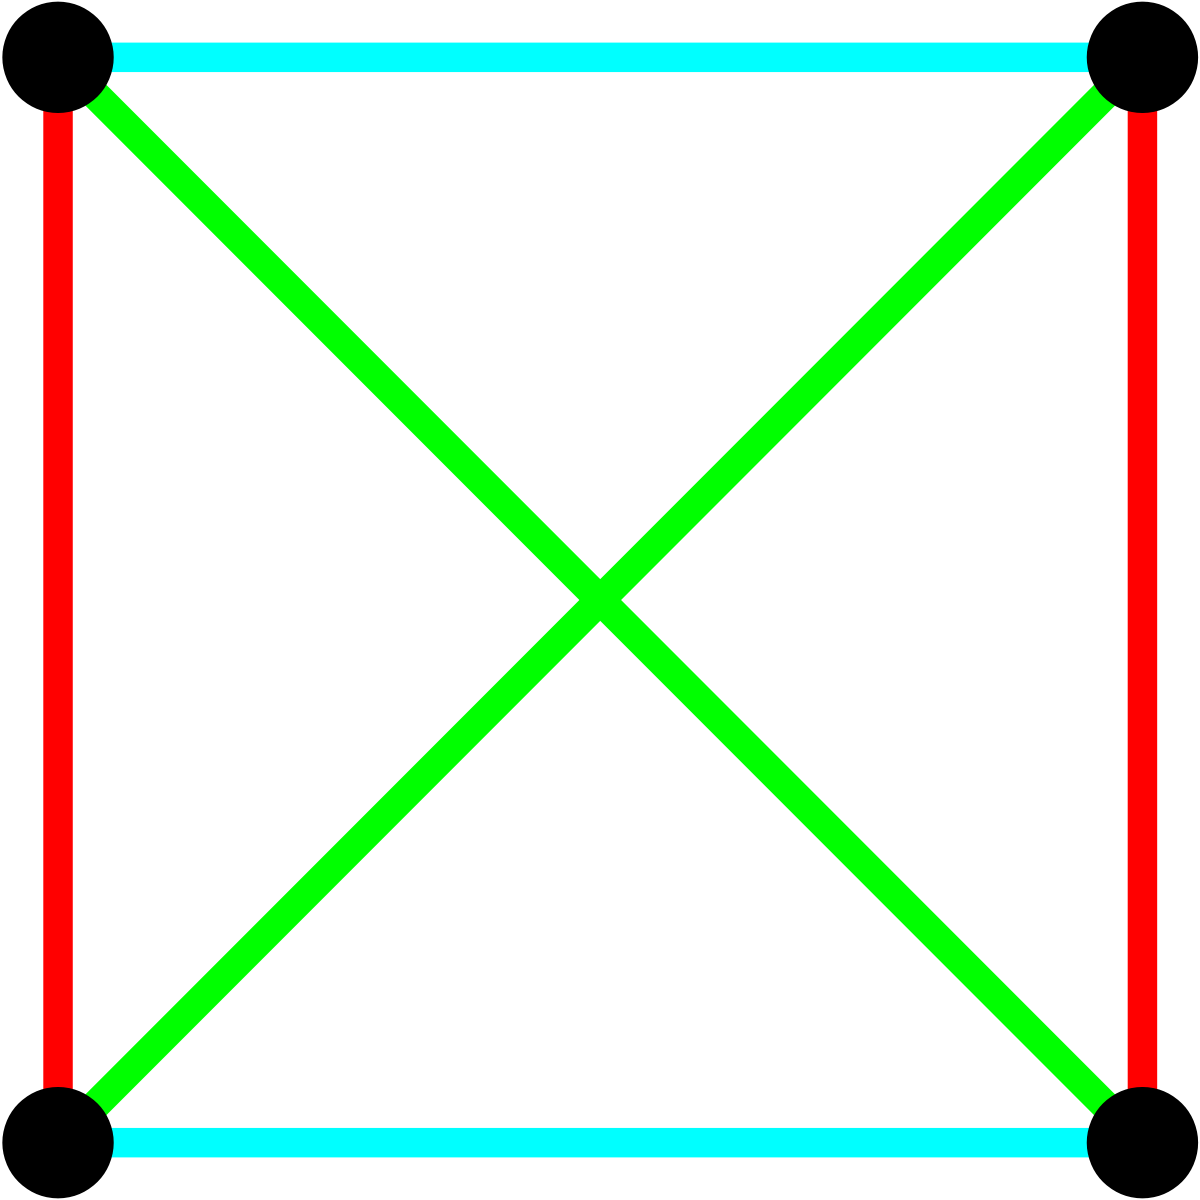 affine geometry on forex